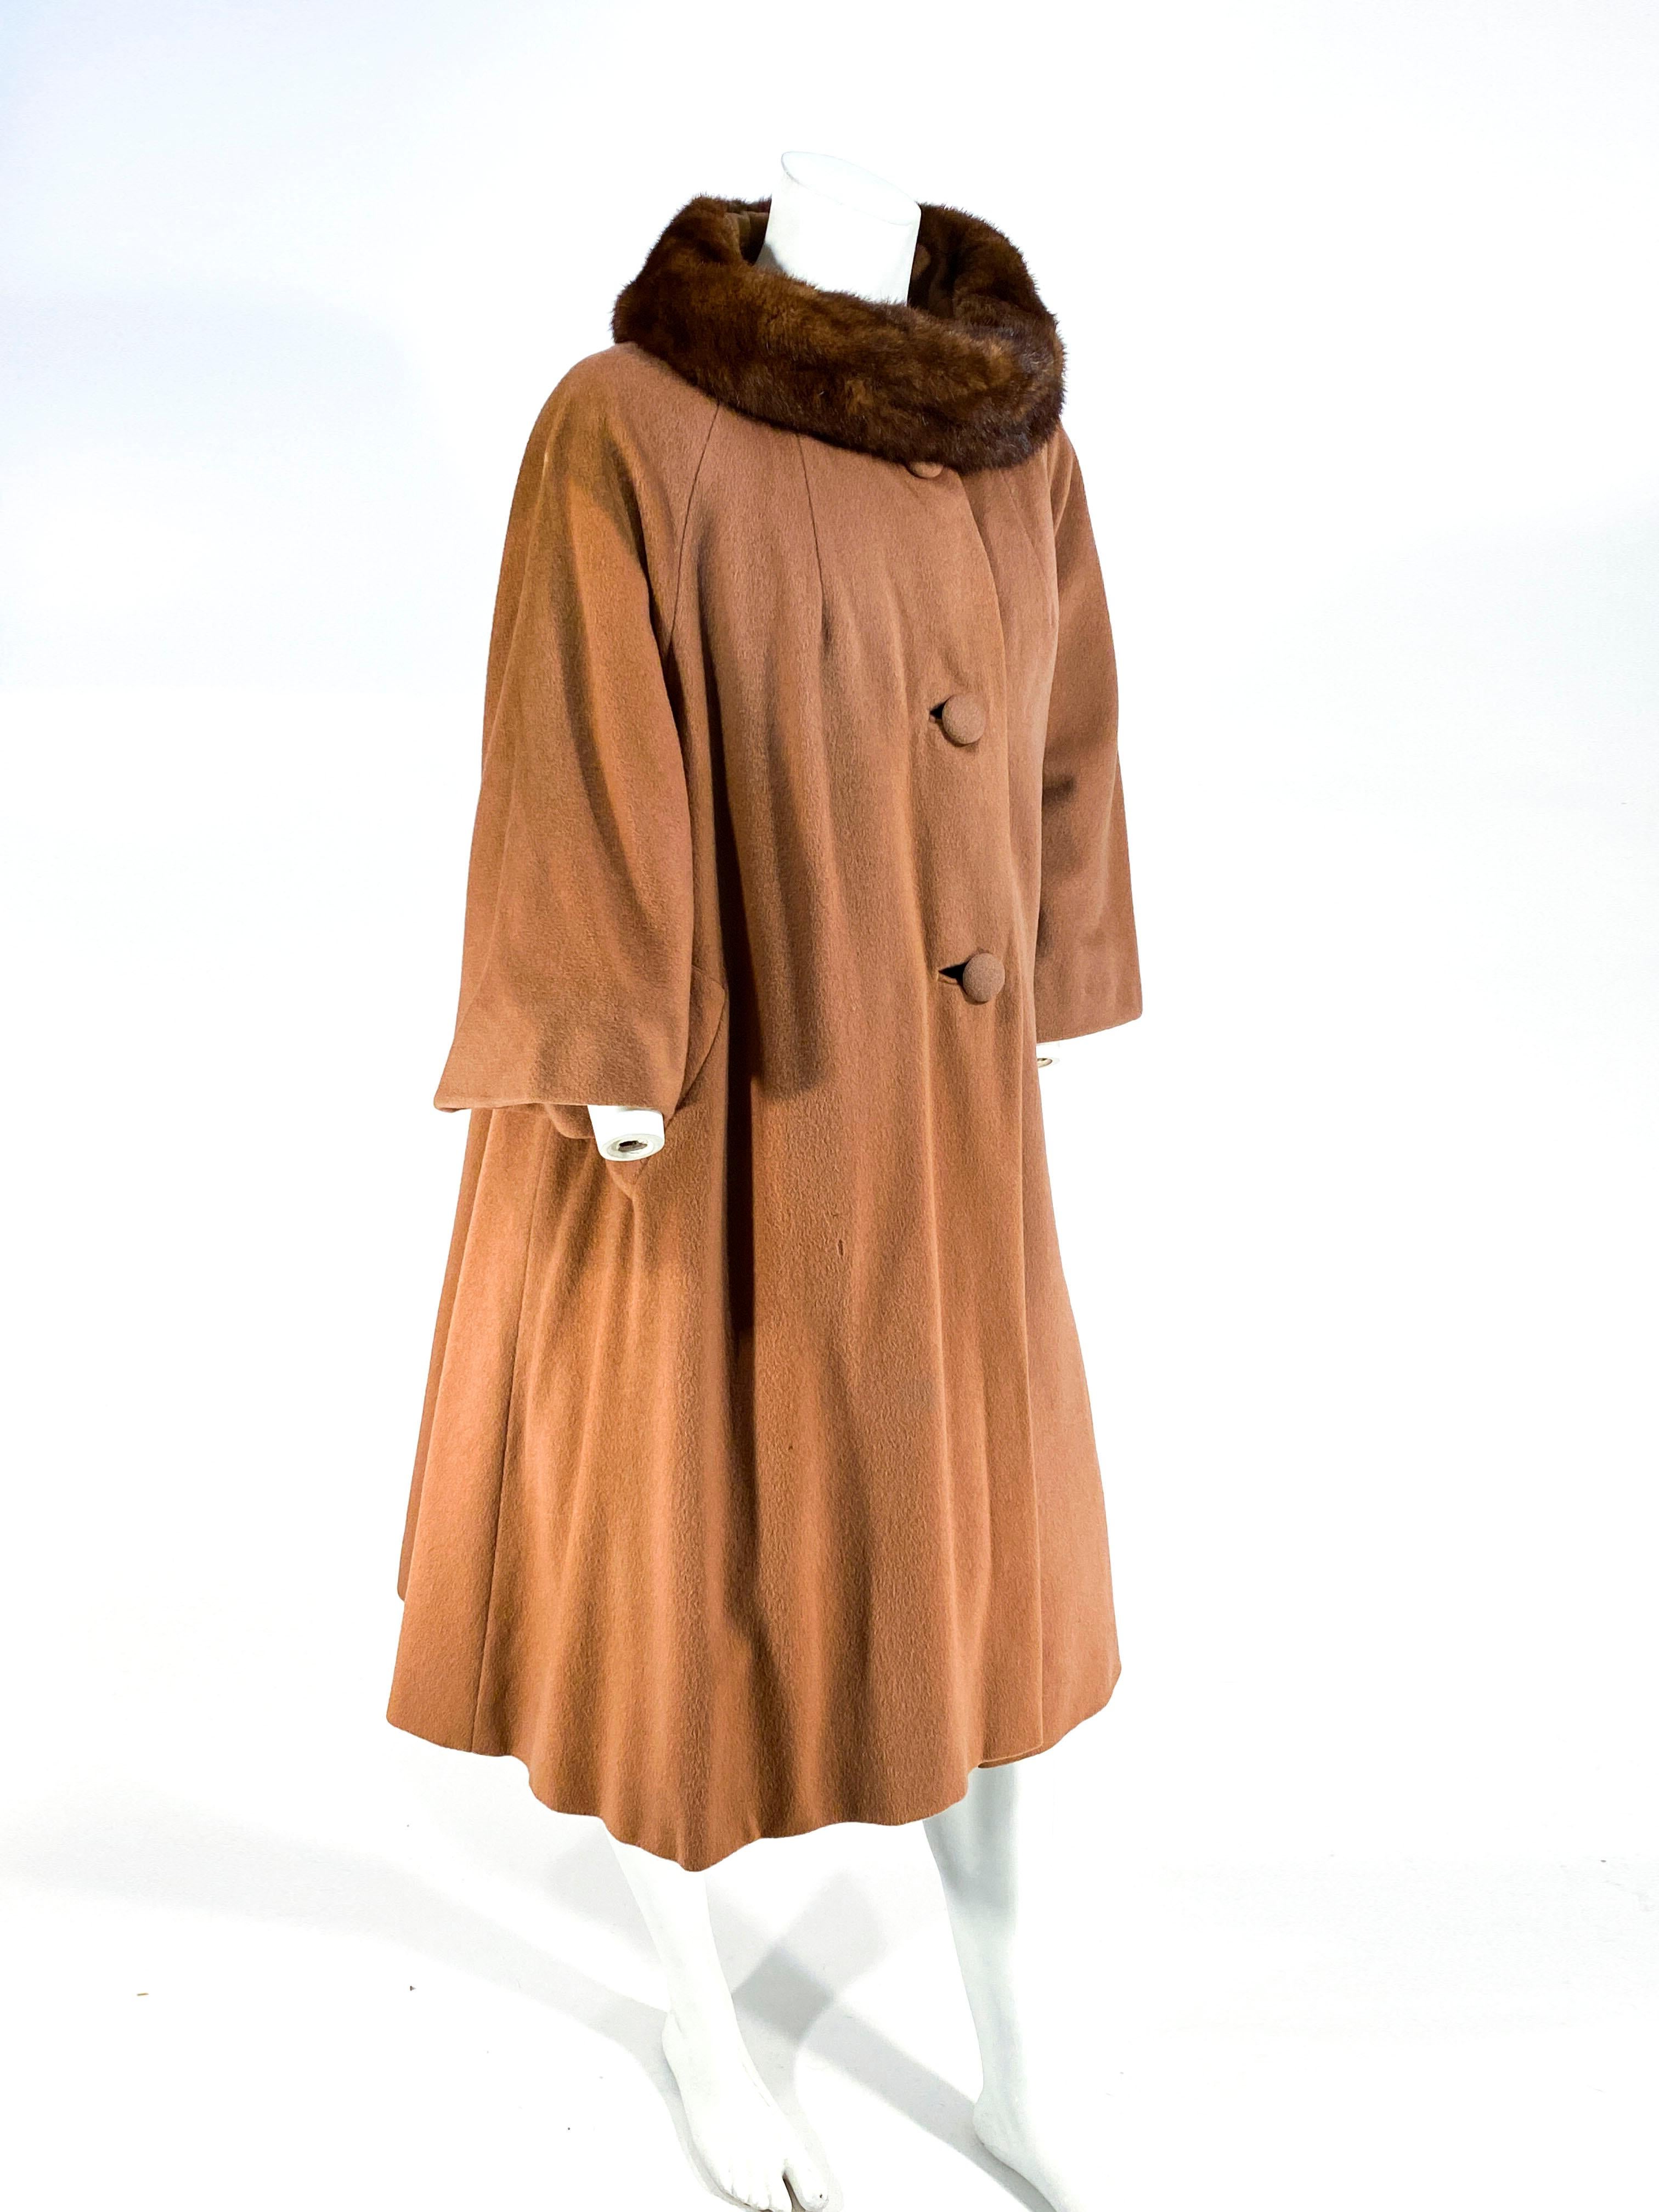 Women's 1950s/1960s Lilli Ann Mocha Brown Cashmere Coat